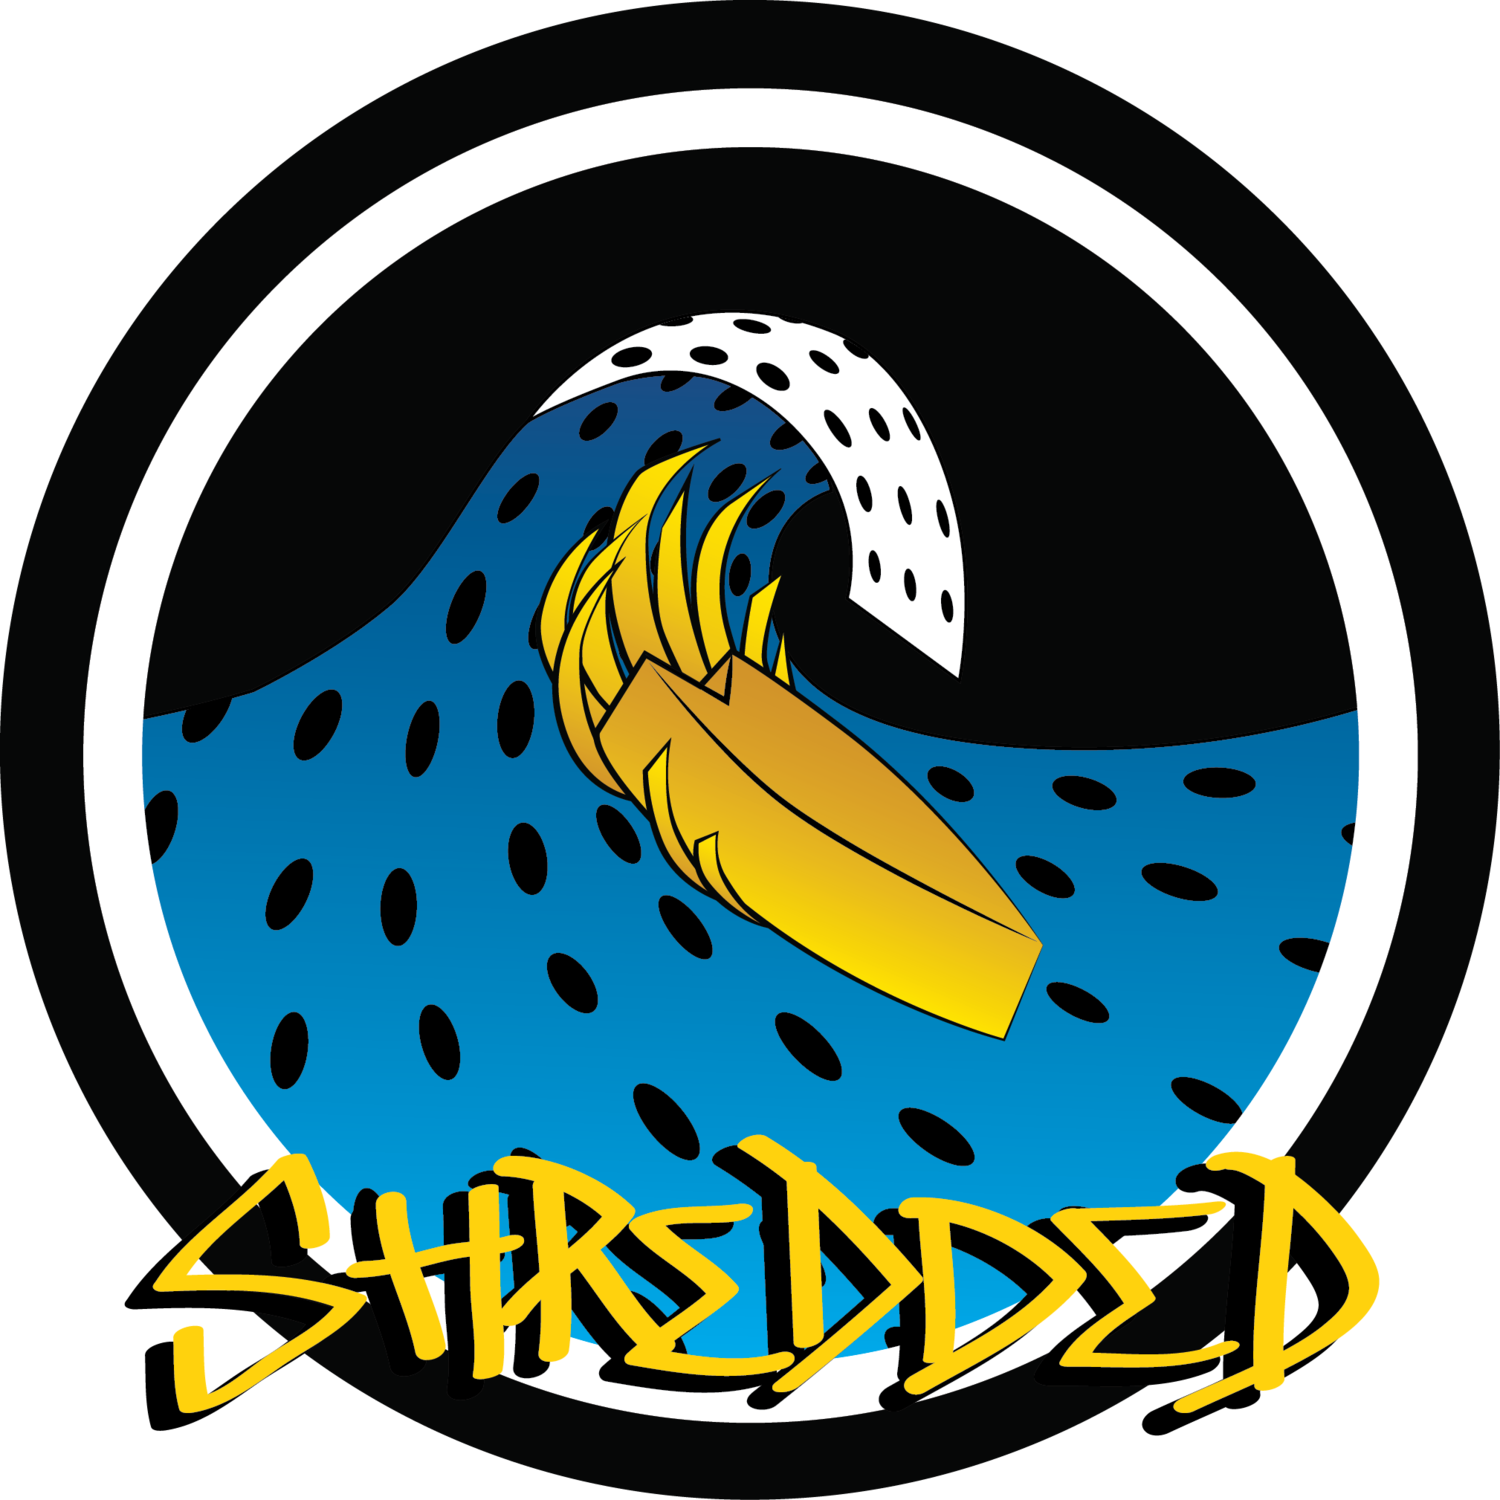 Shredded Surfboards